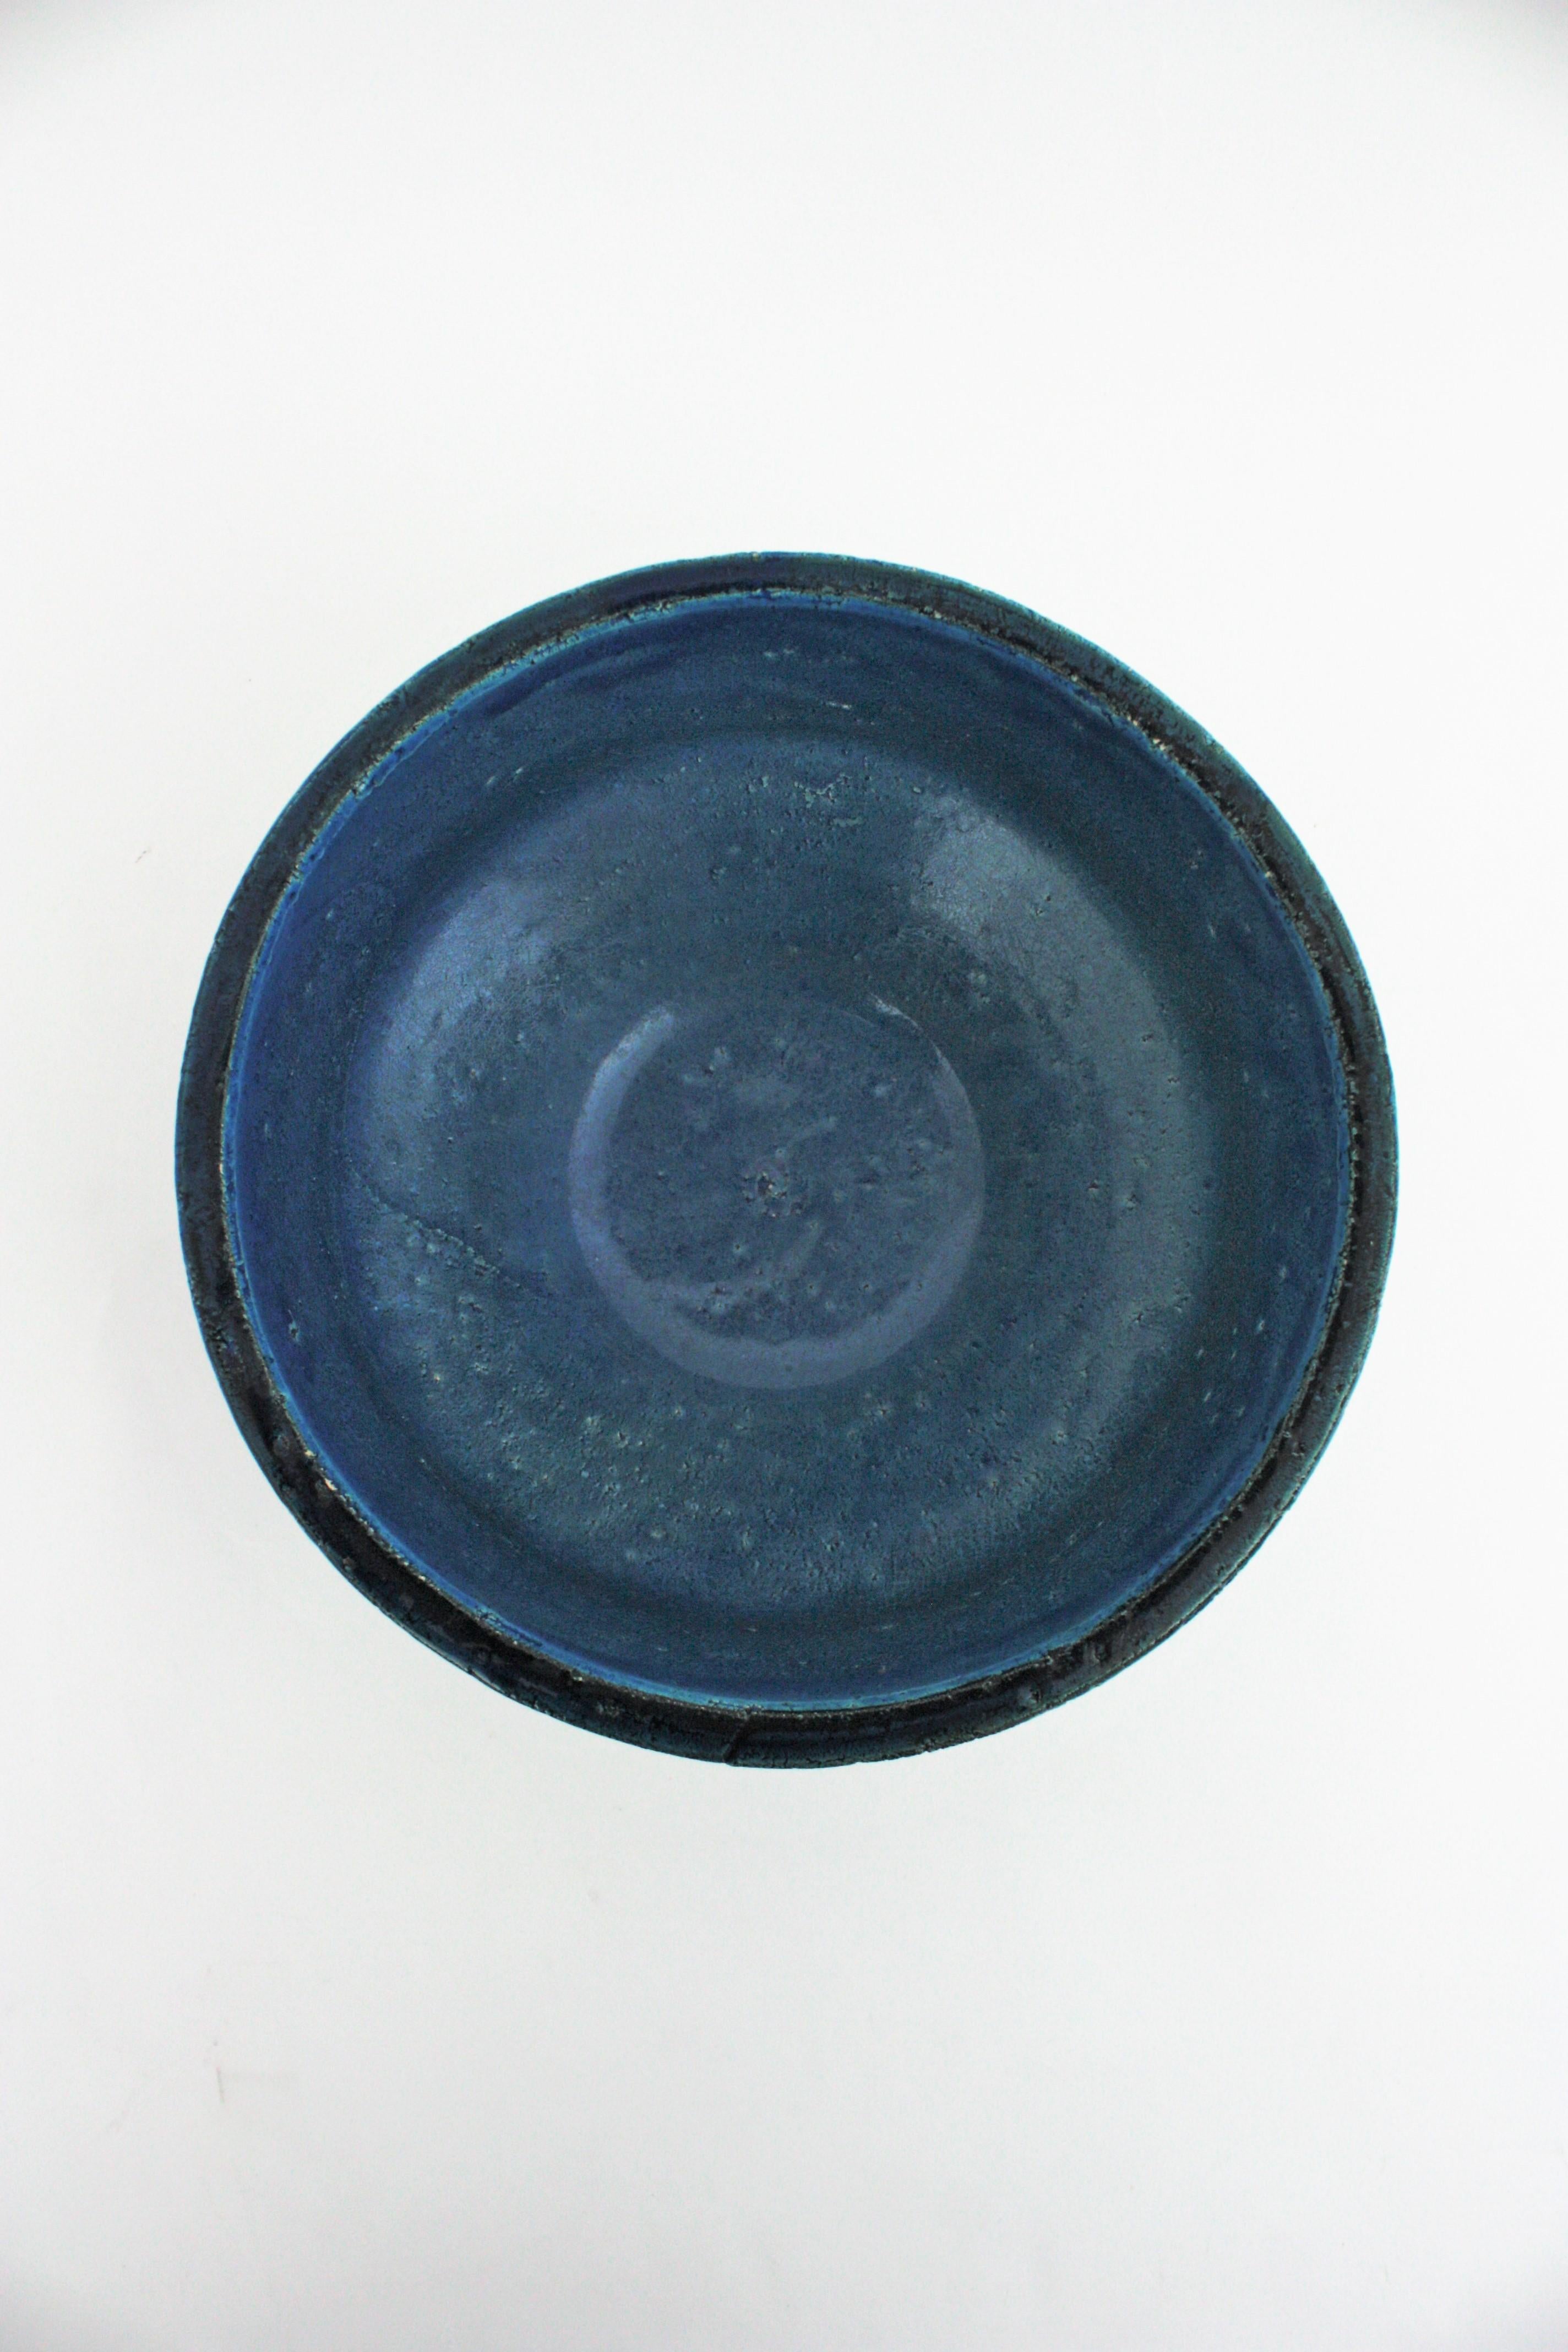 Bitossi Ando Londi Rimini Blue Glazed Ceramic Centerpiece or Fruit Bowl For Sale 2